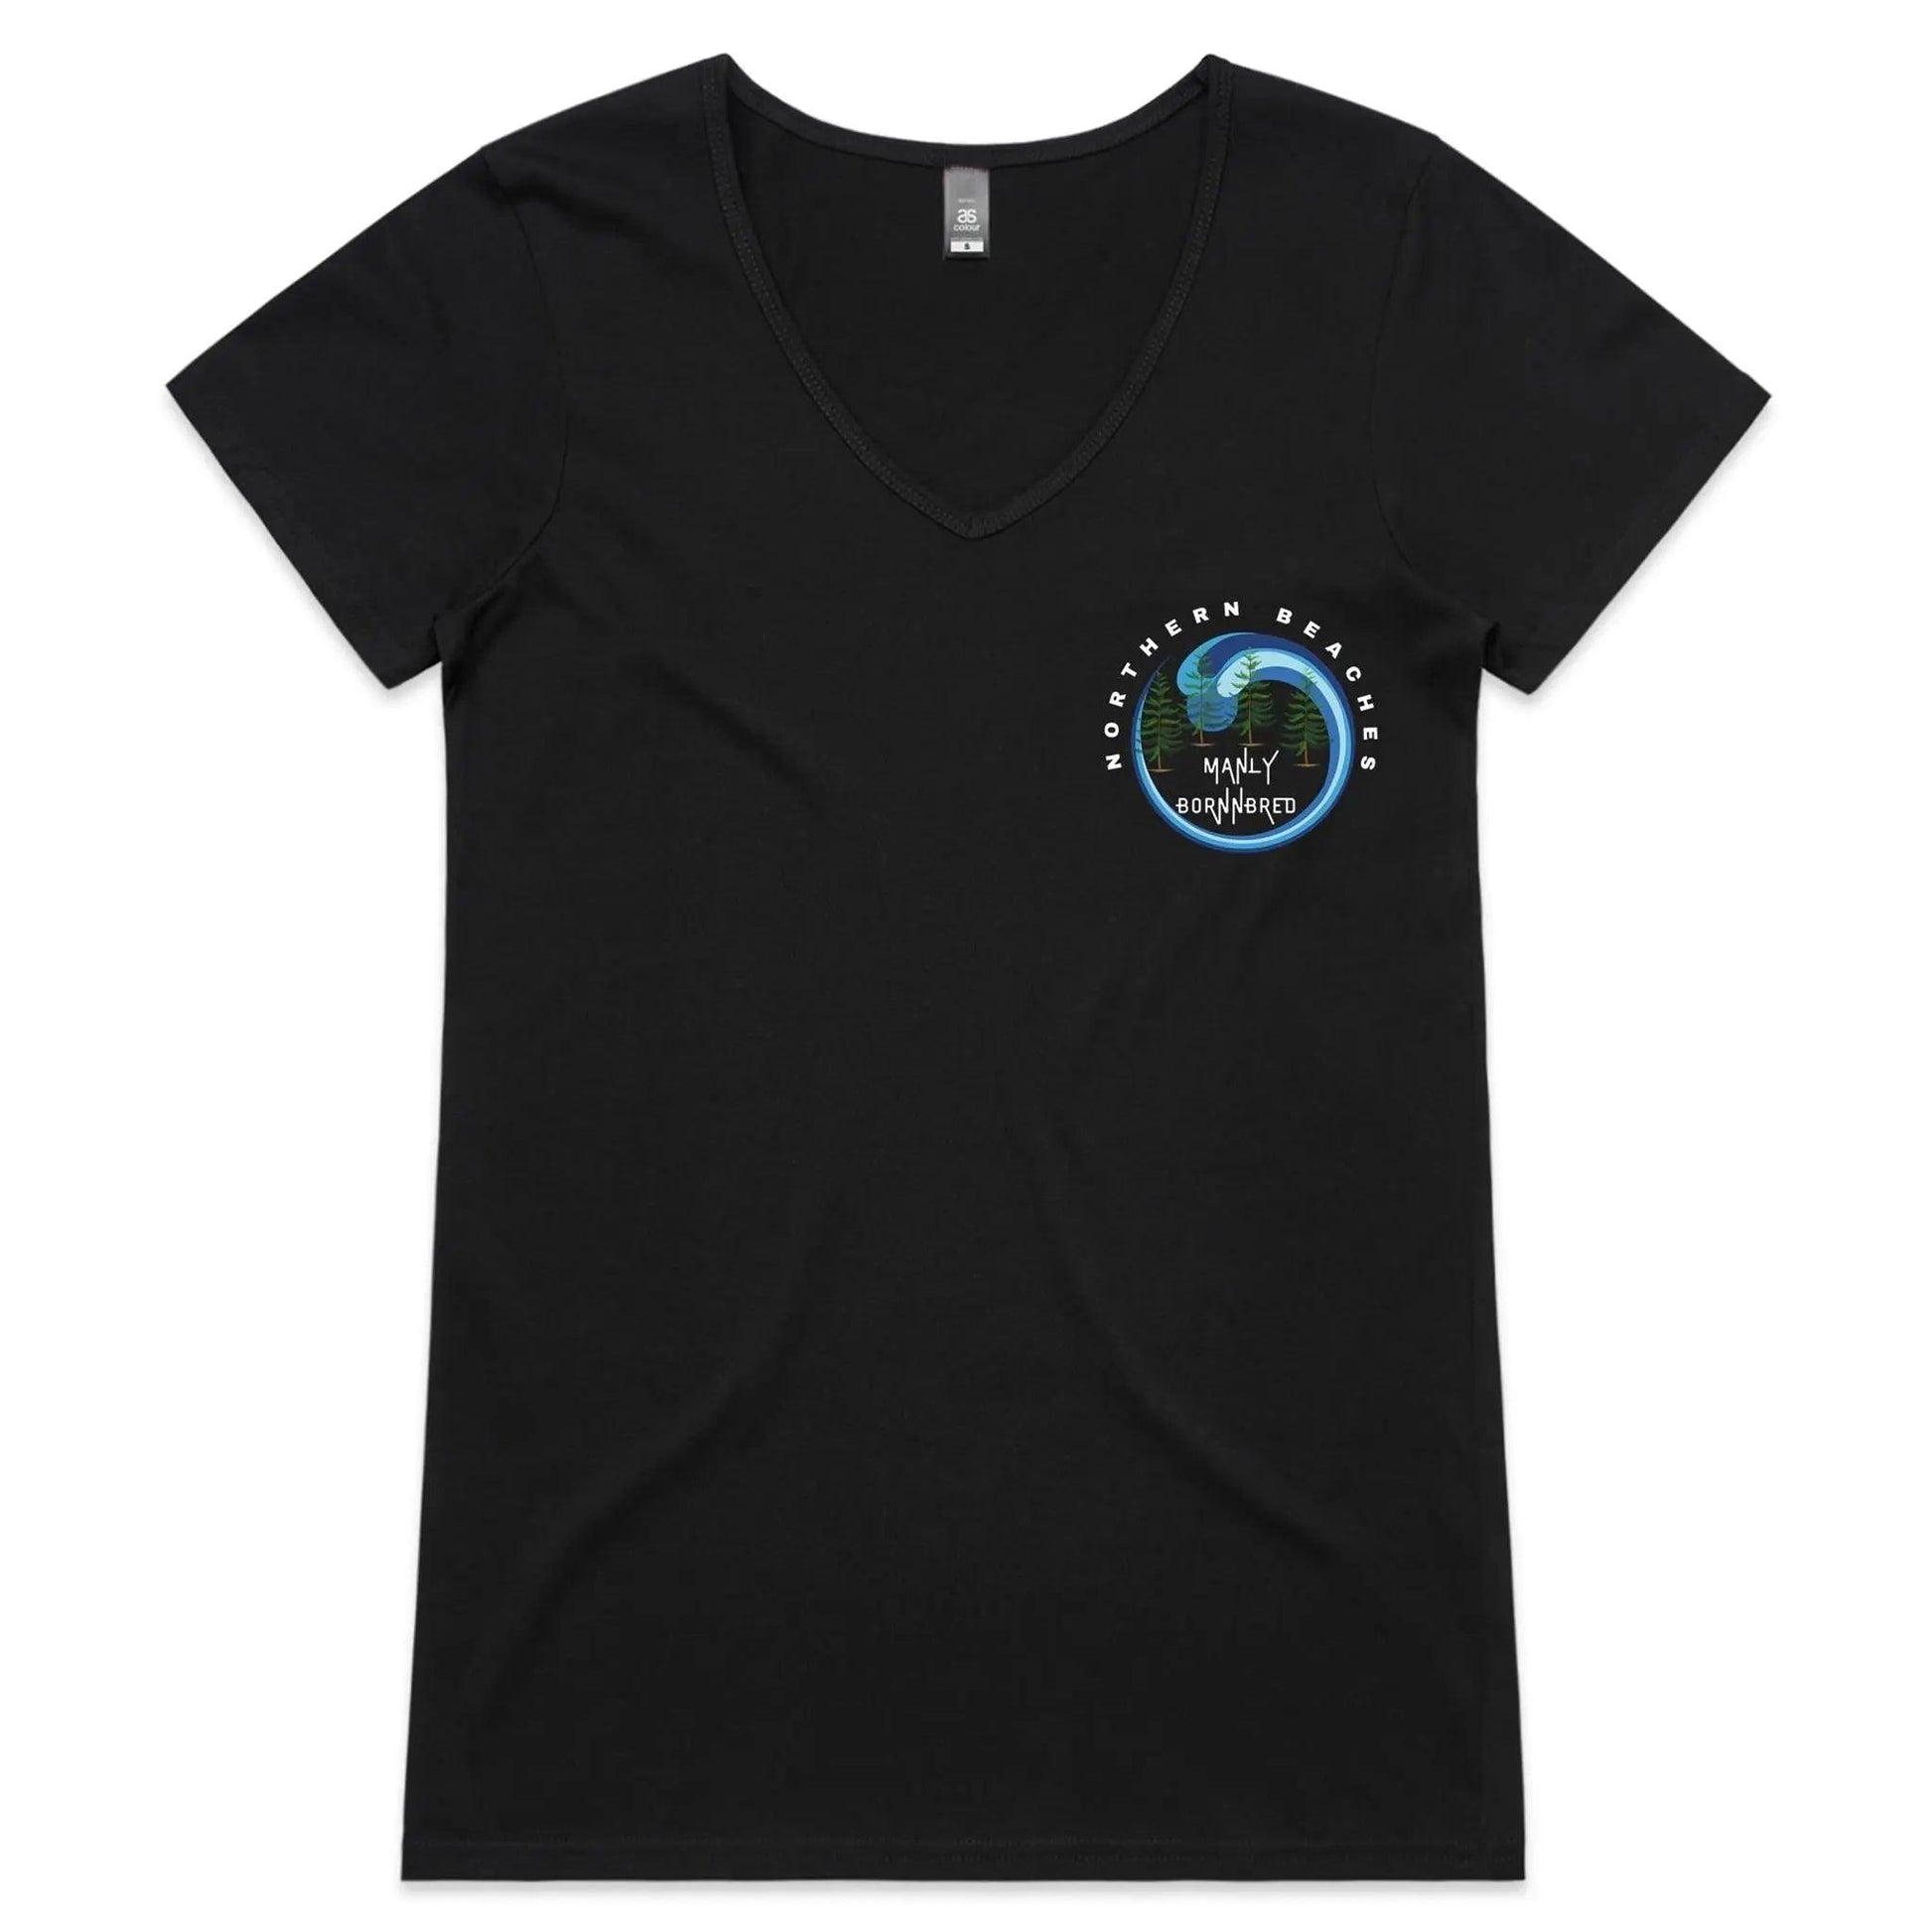 V-Neck Black T-Shirt digital print logo on front Northern Beaches Manly BornNBred